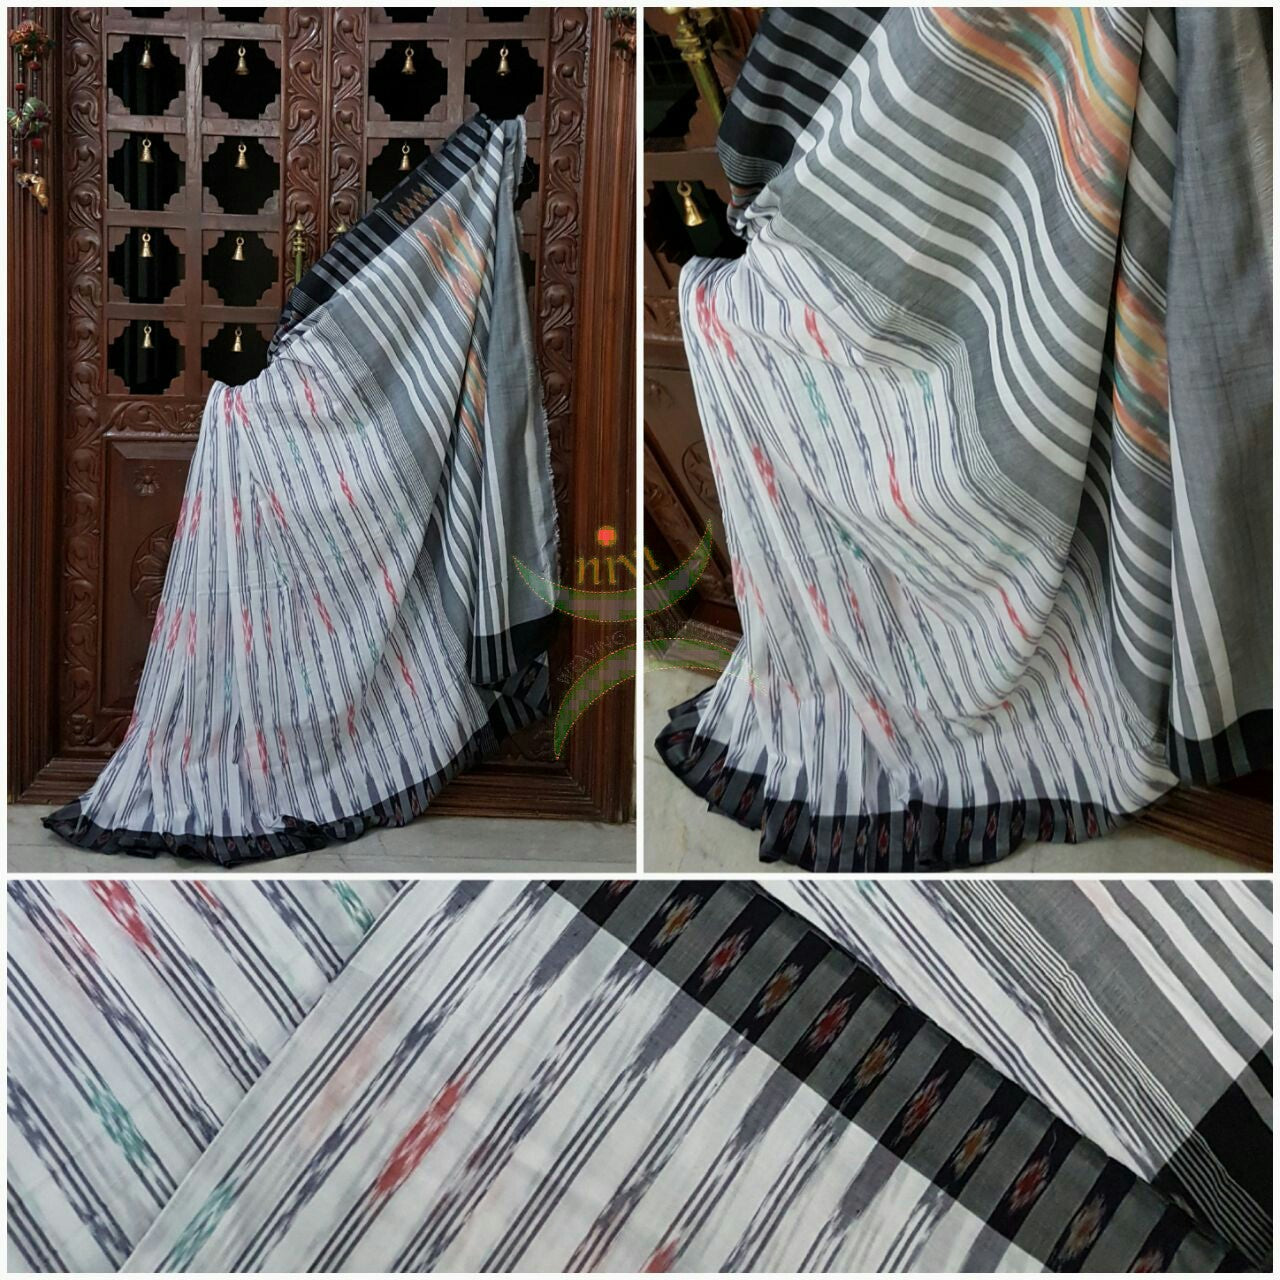 Off white Pochampalli-ikat Handloom Soft Cotton Saree with grey black contrasting border and pallu.